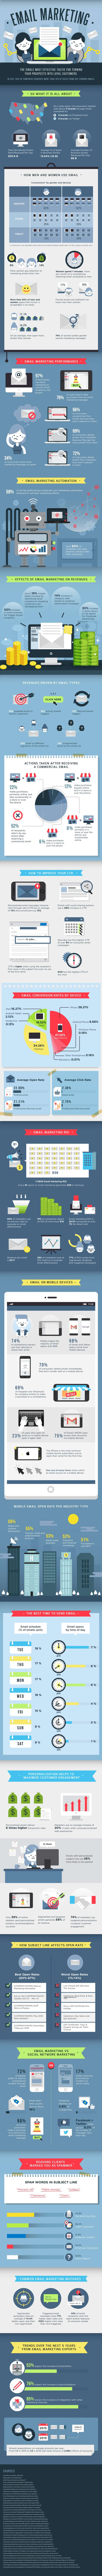 118 Email Marketing Statistics | EveryCloud